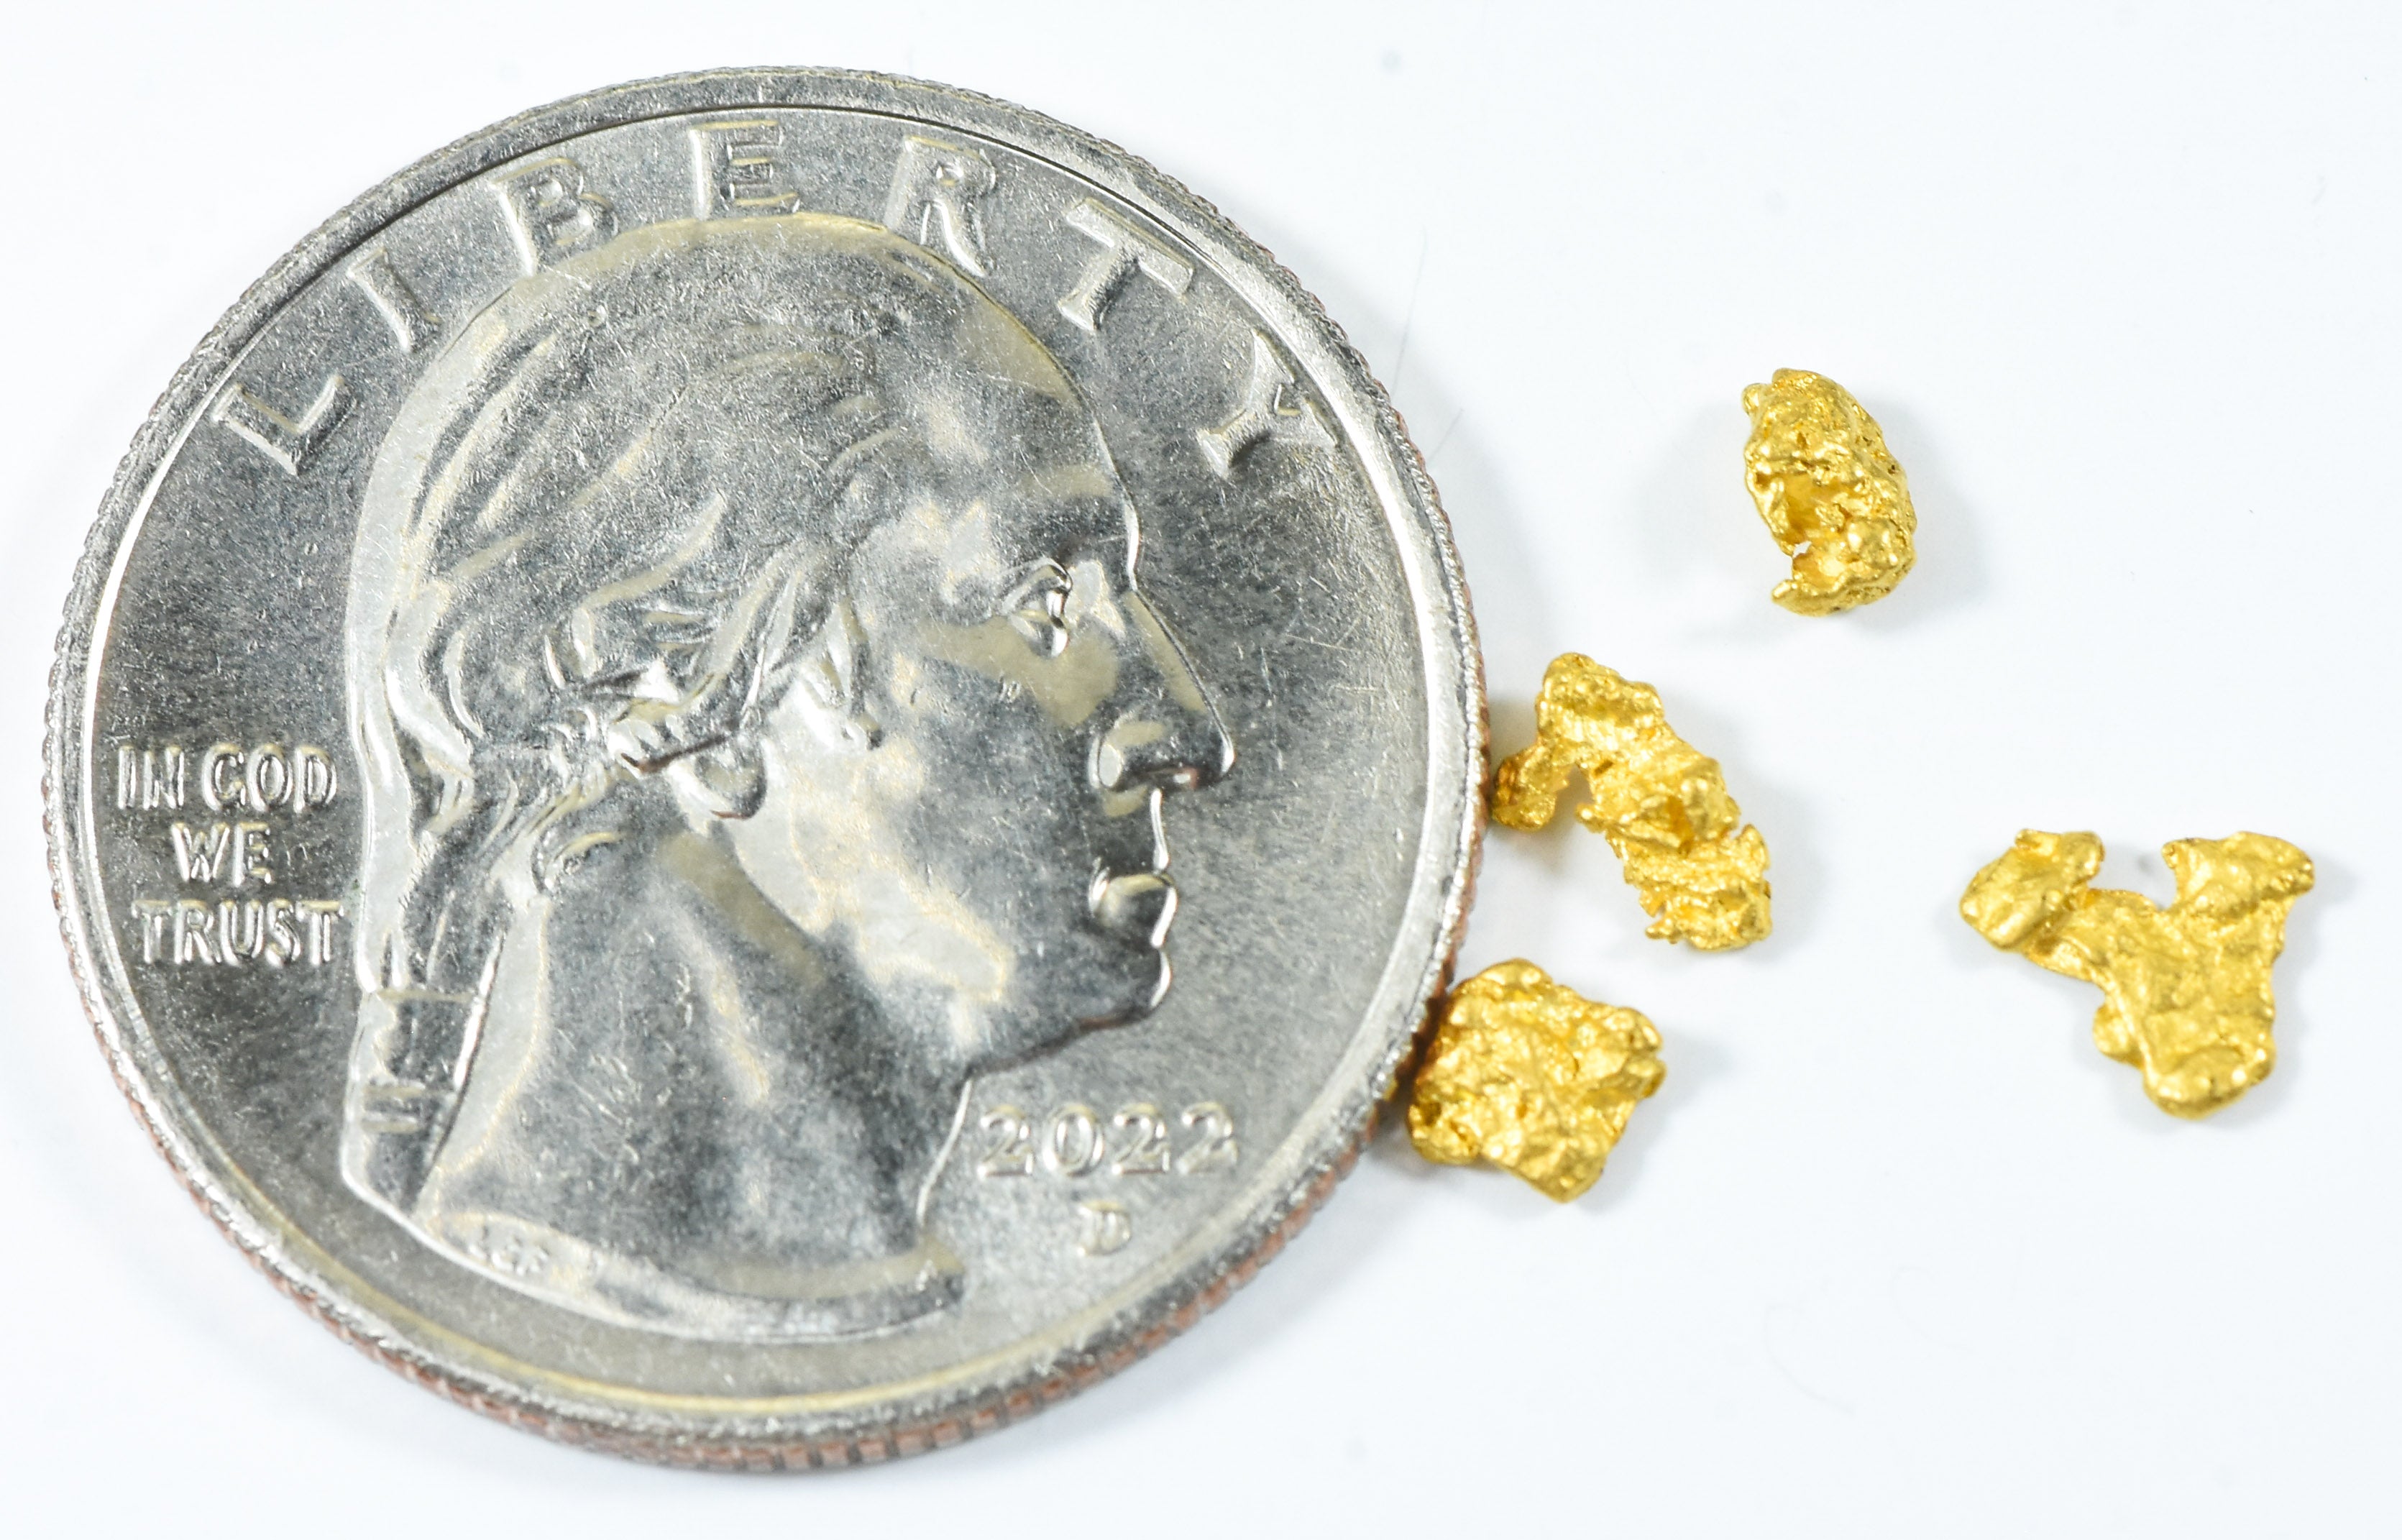 Natural Gold Nugget Australian .15 Gram Genuine